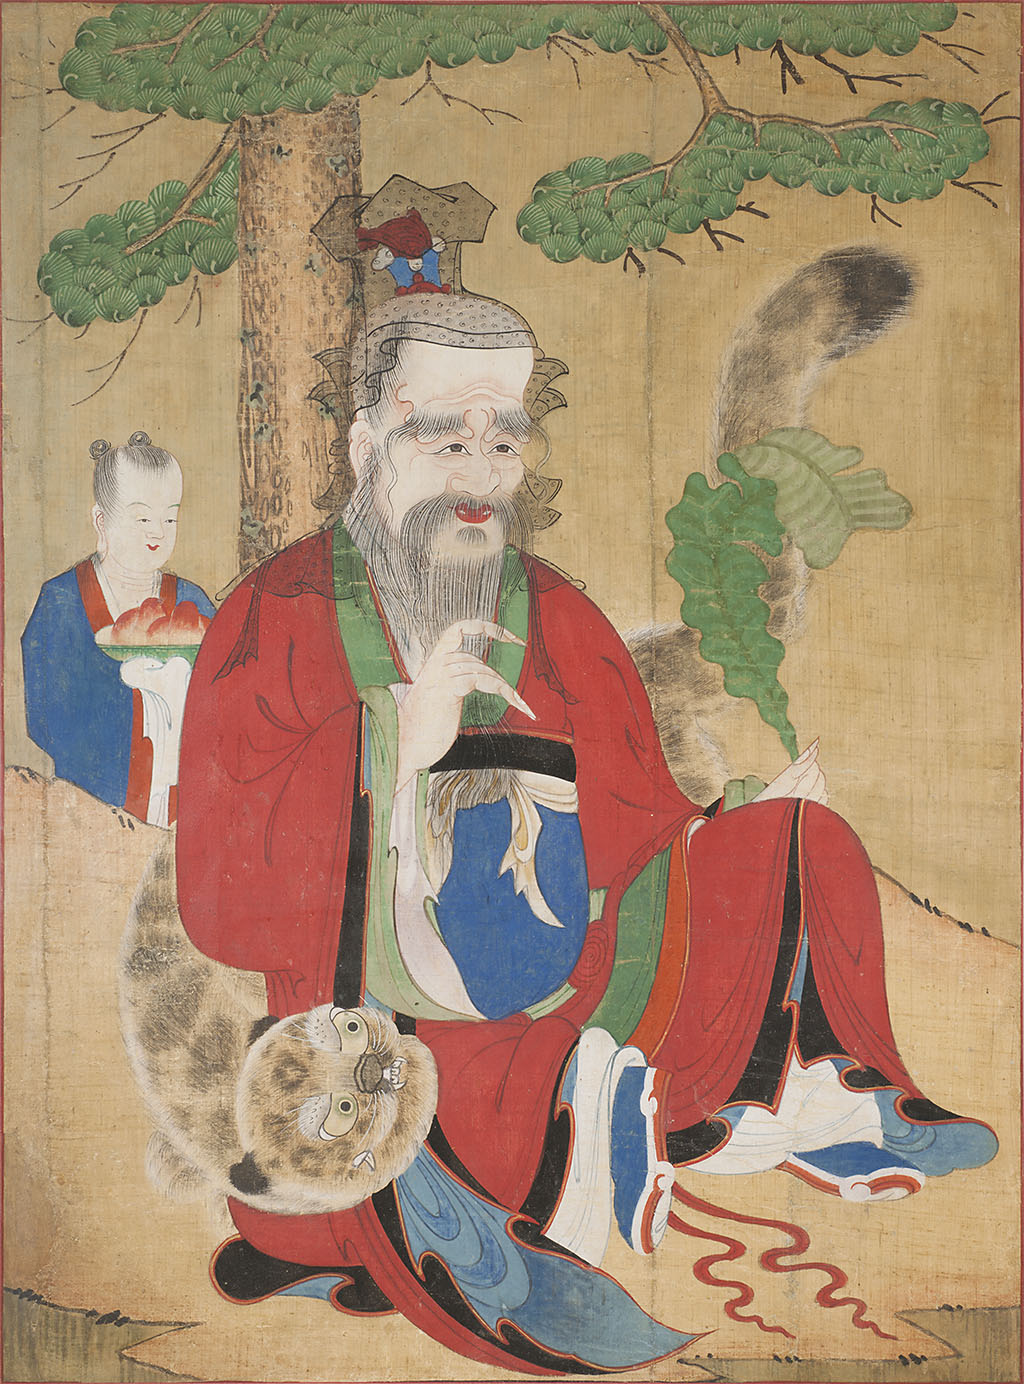 San-shin (Mountain Spirit), from Korea, Joseon Dynasty